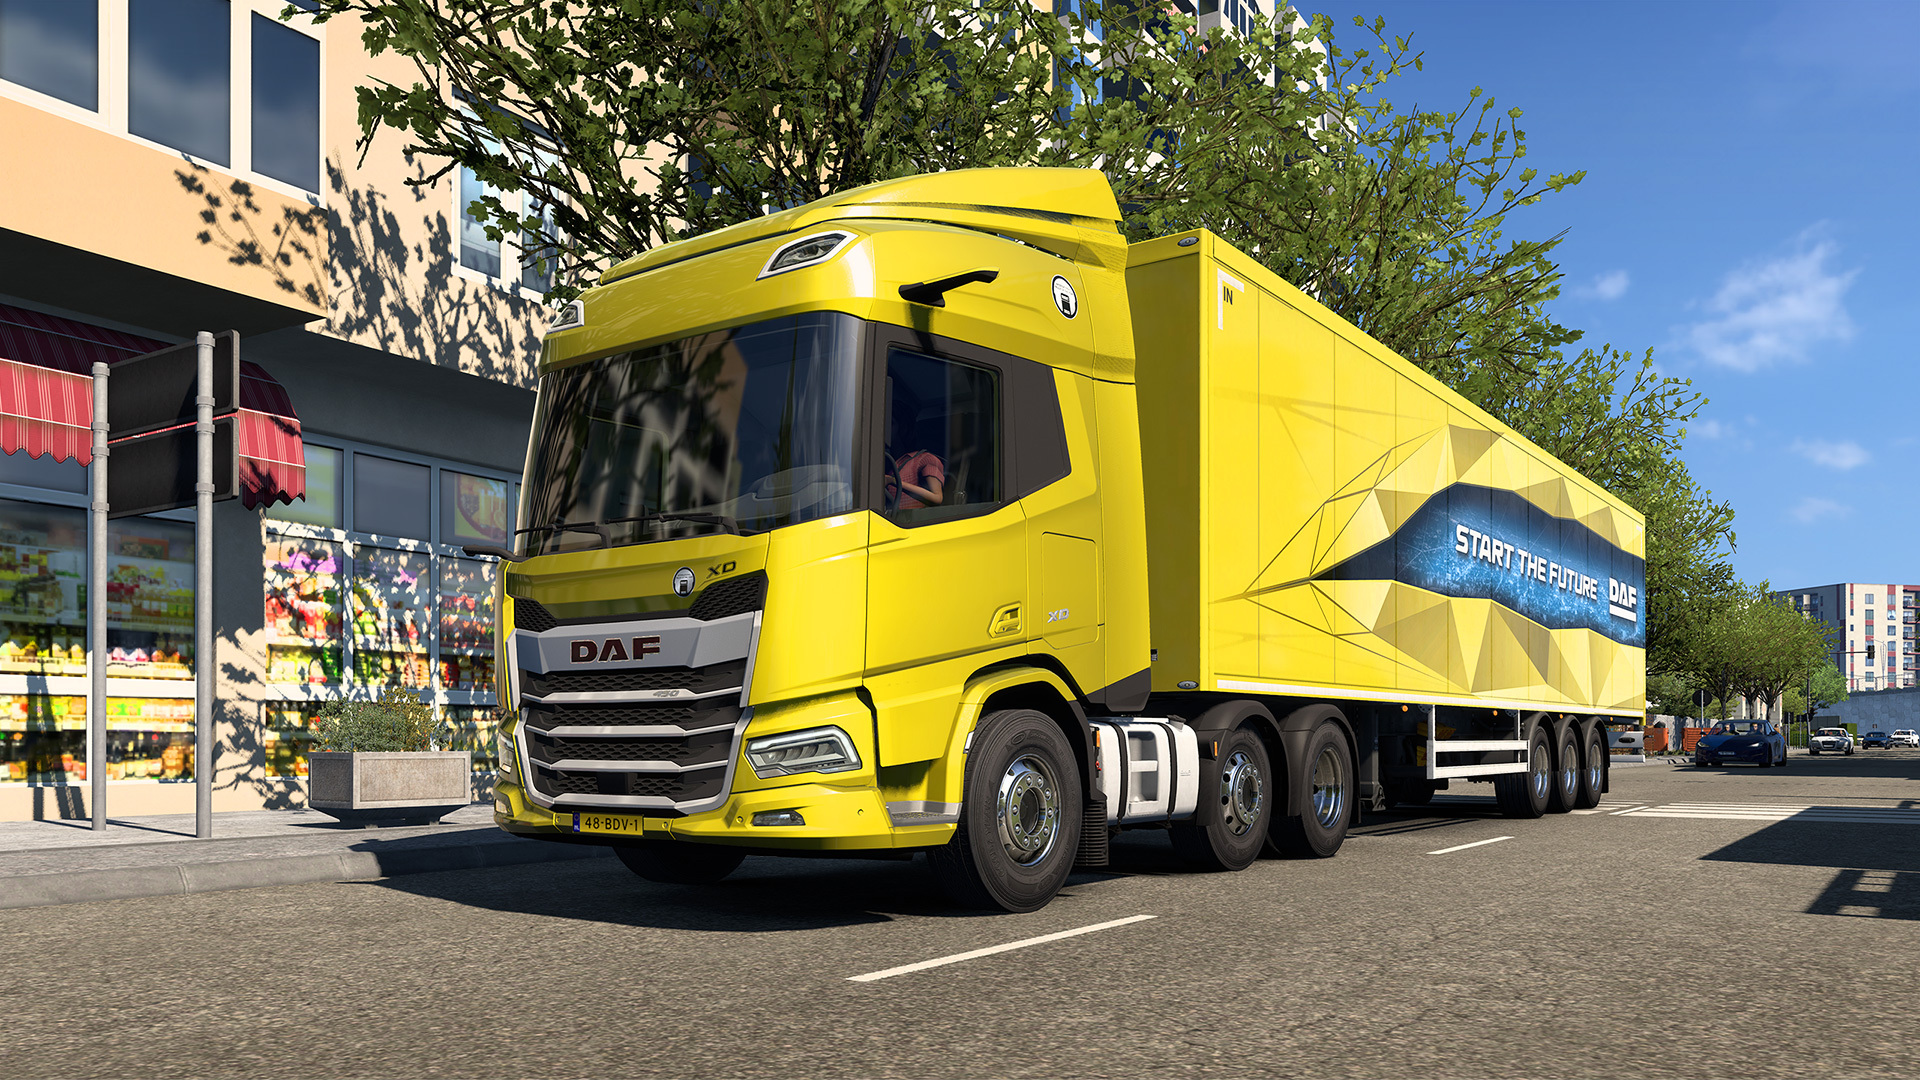 Ultimate Euro Truck Simulator 2 guide from a trucking fanatic